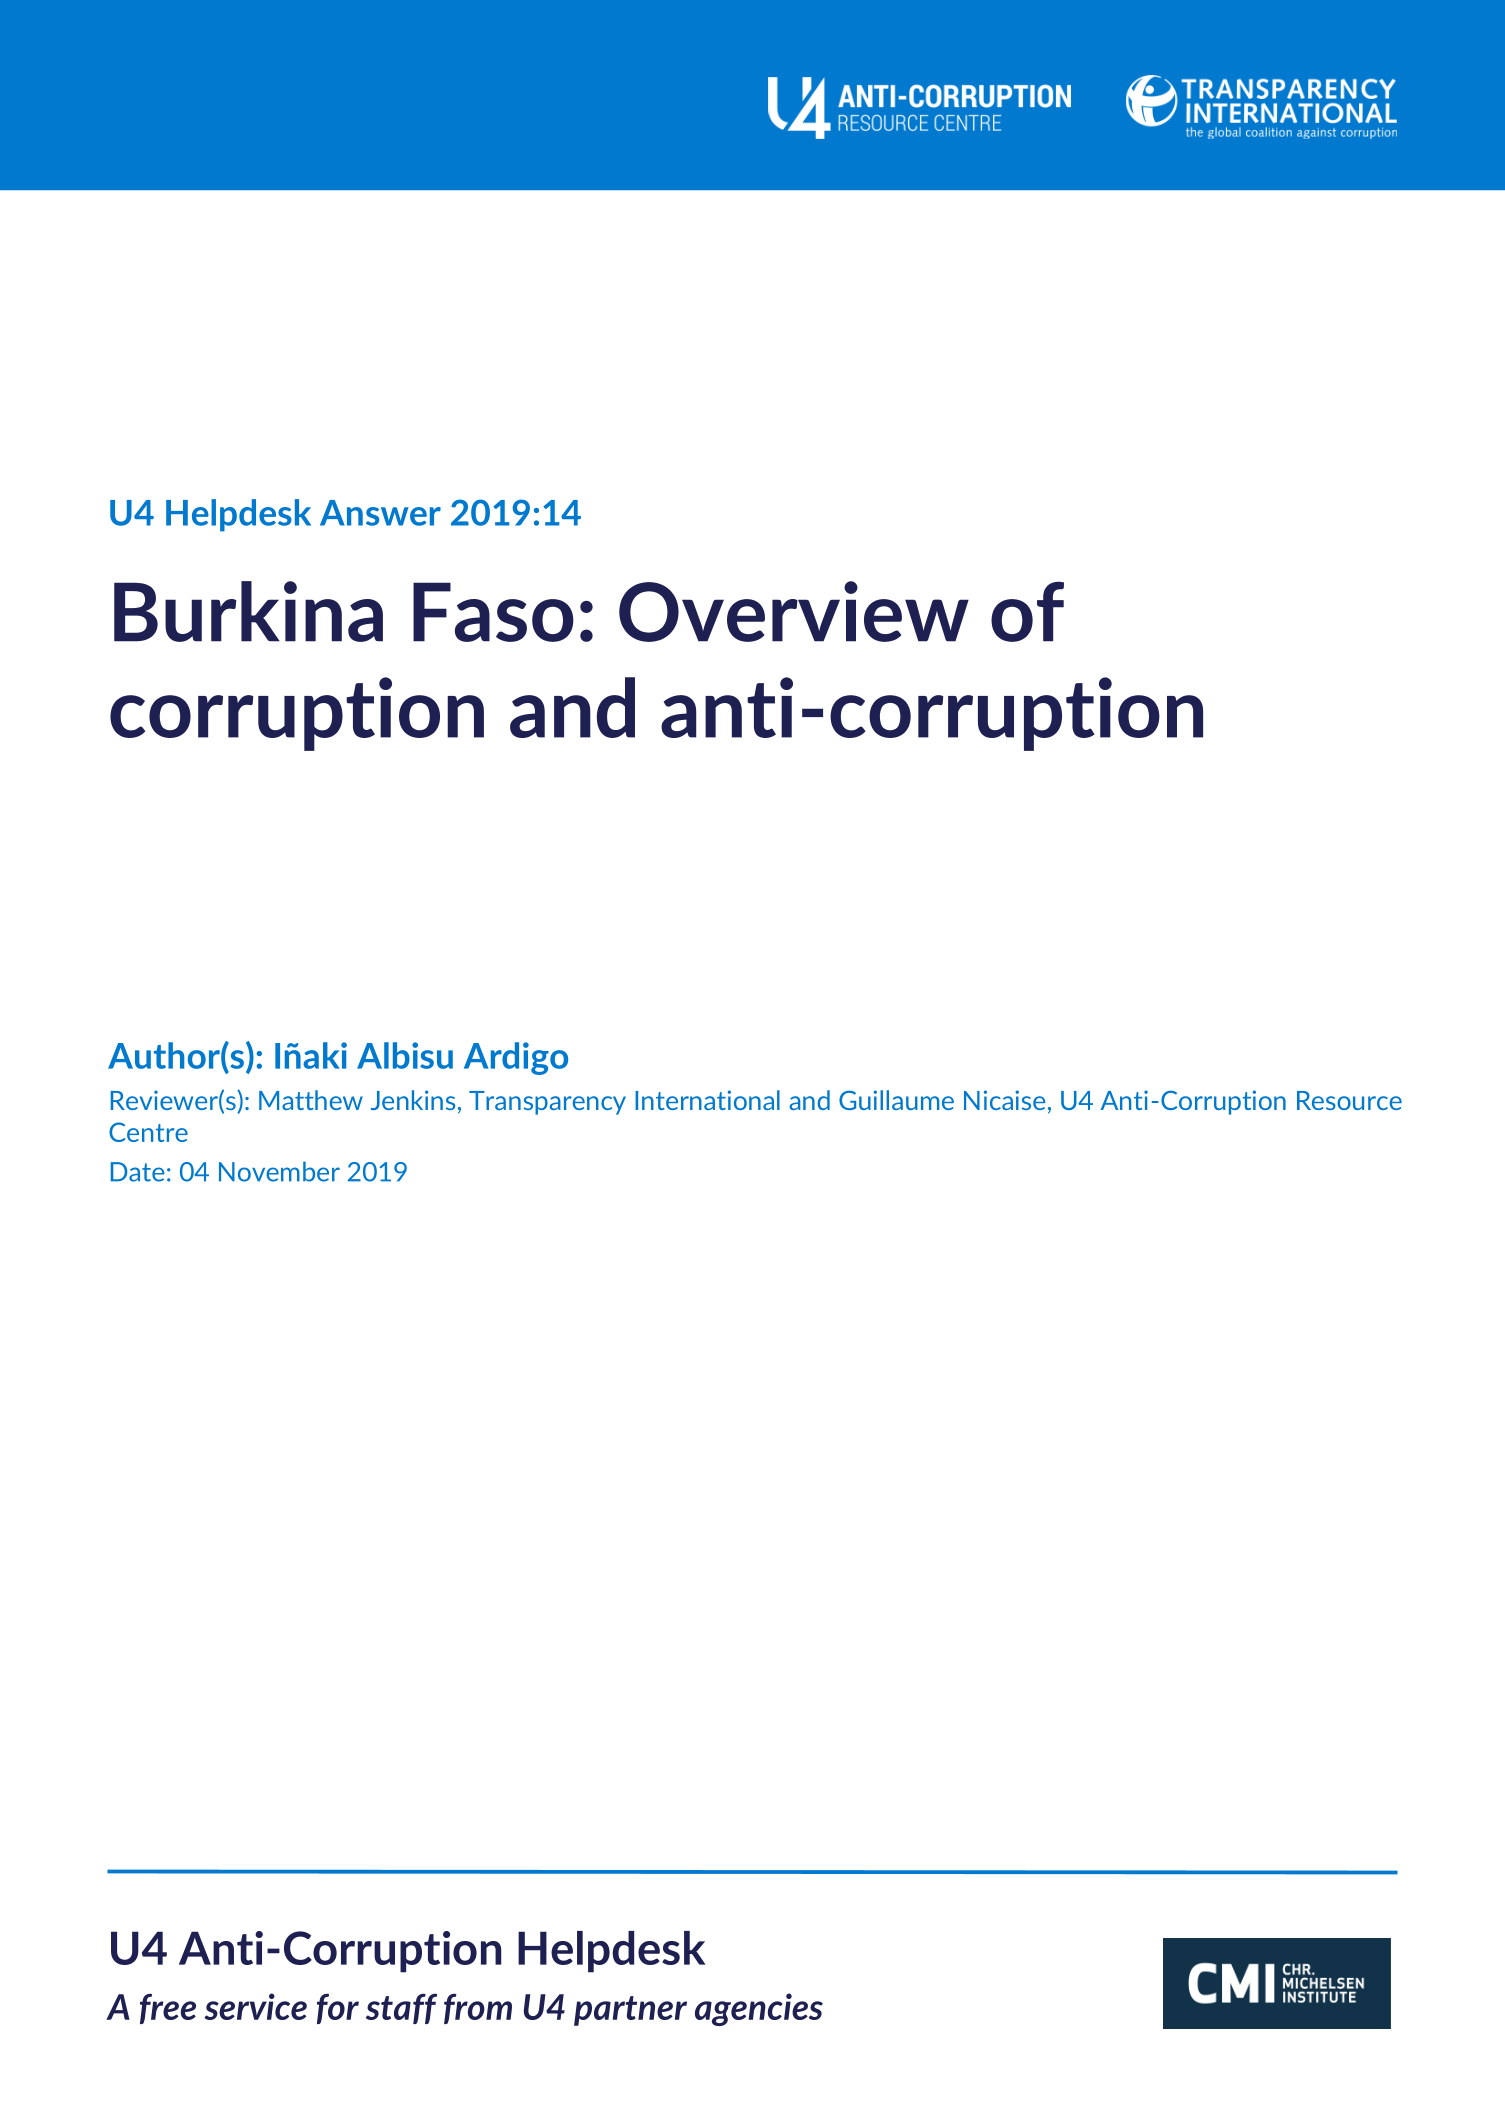 Burkina Faso: Overview of corruption and anti-corruption